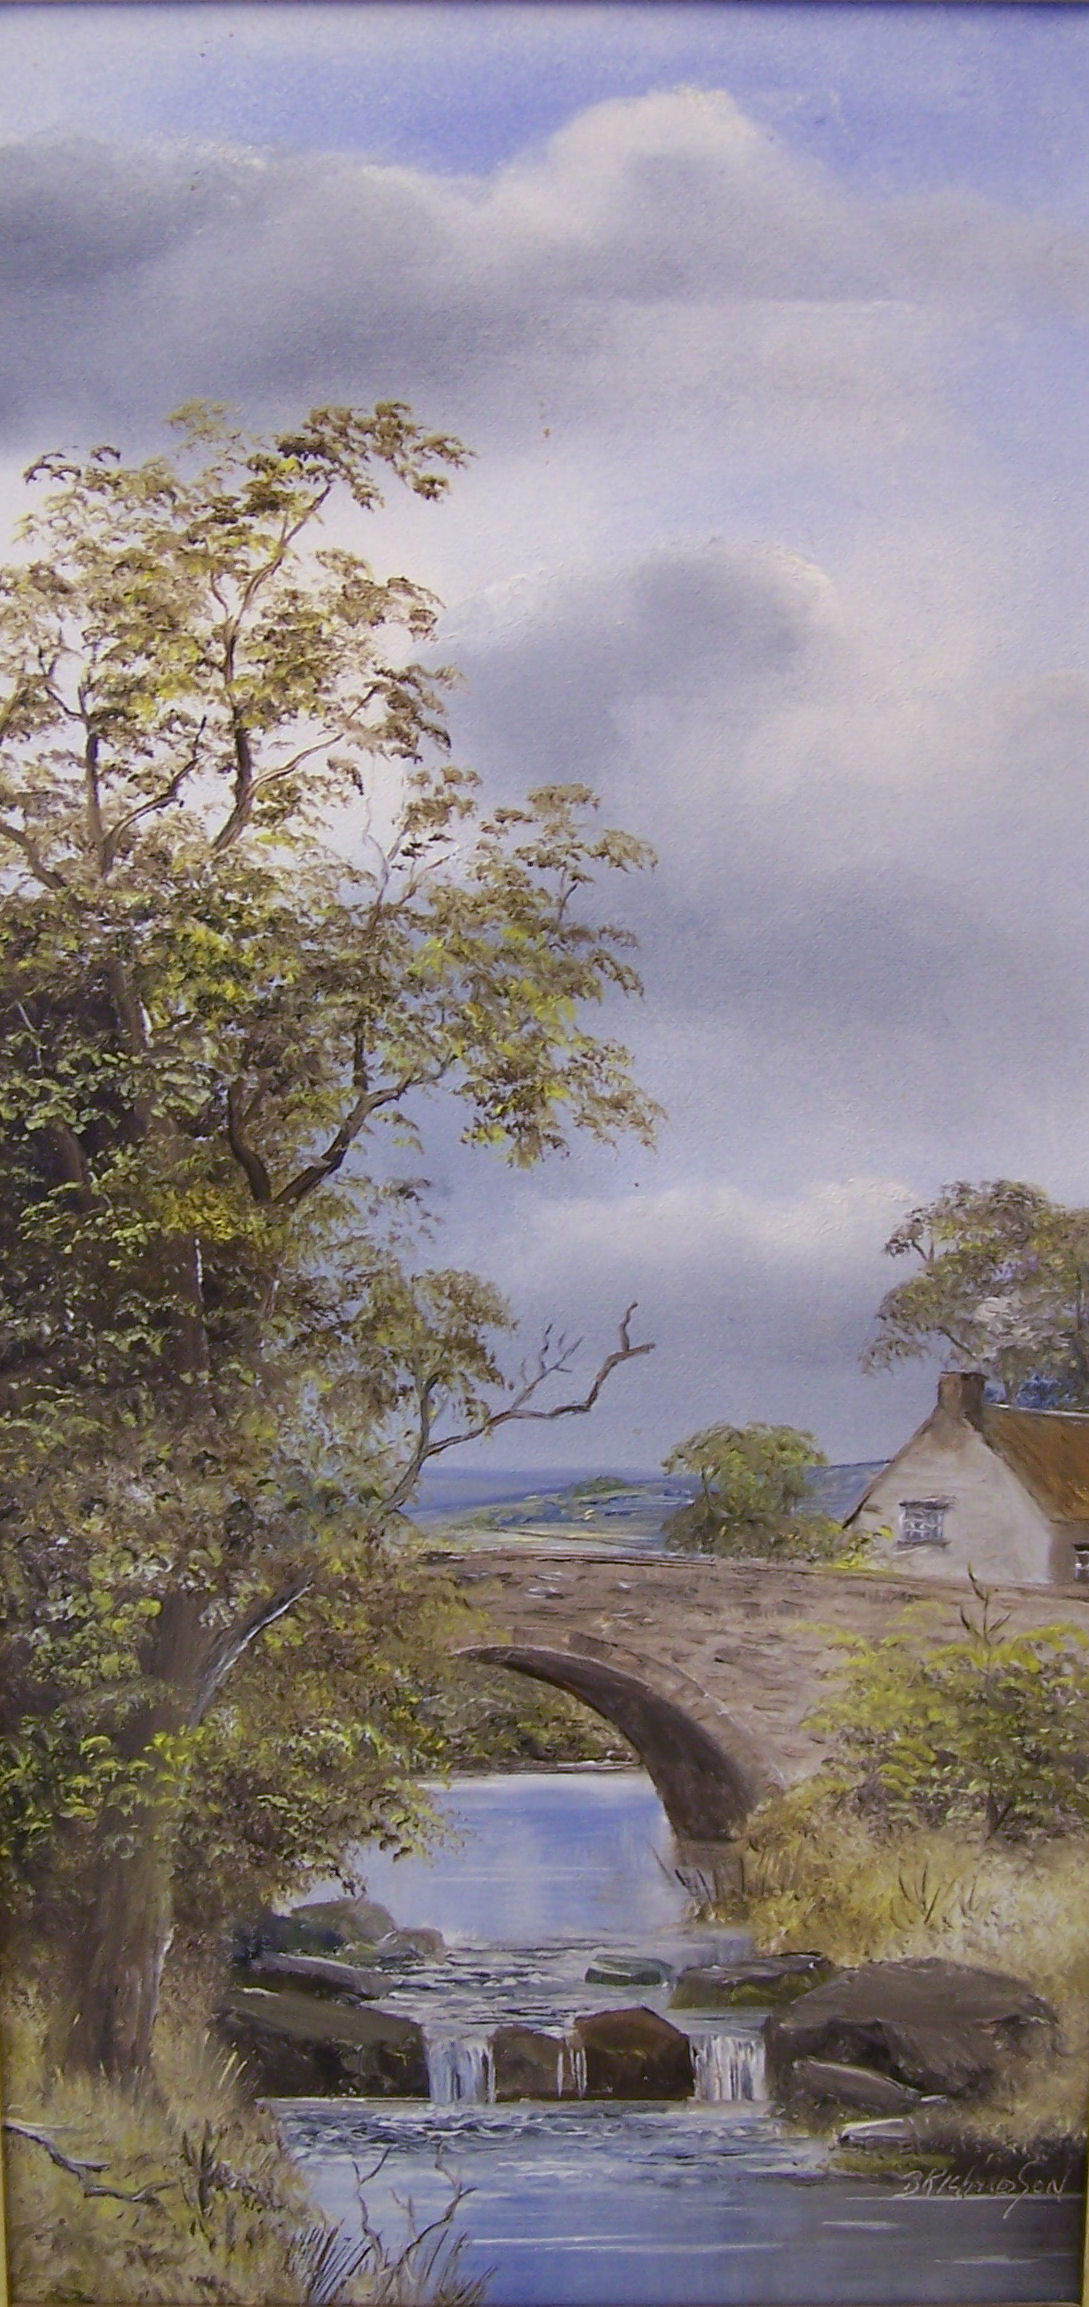 BRIAN RICHARDSON, River Landscape with stone bridge, Oil on Canvas, signed, 19 1/2"" (49cms) x 5 1/